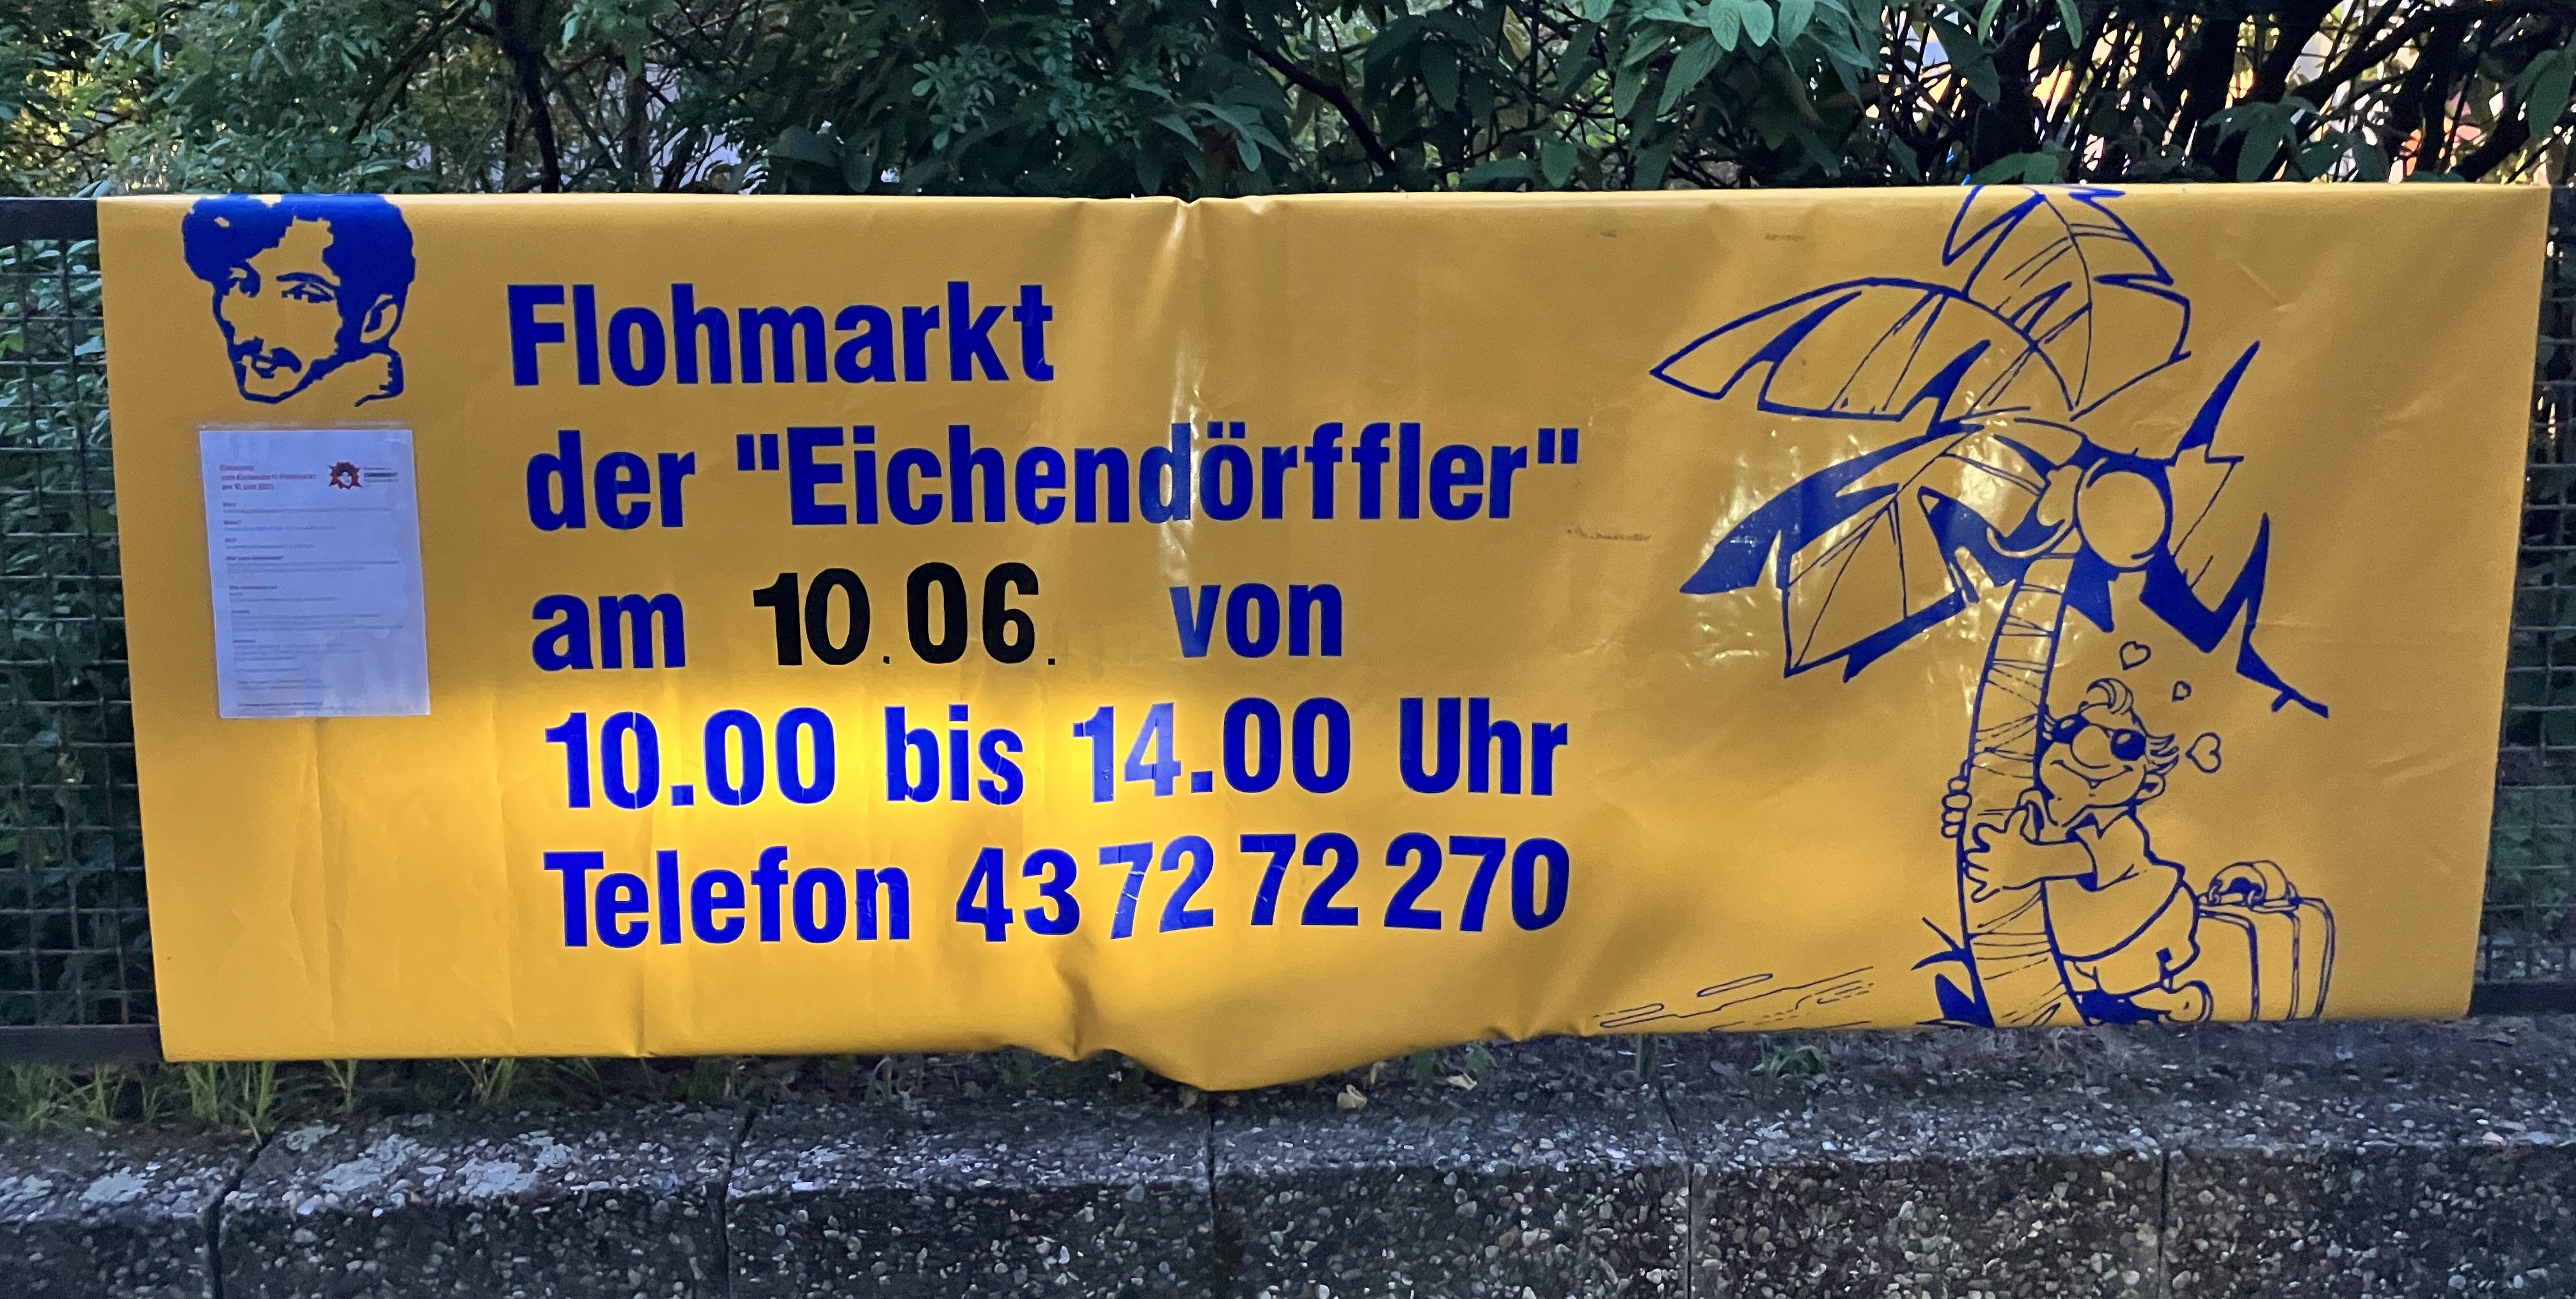 Flohmarkt-Banner am Schulzaun